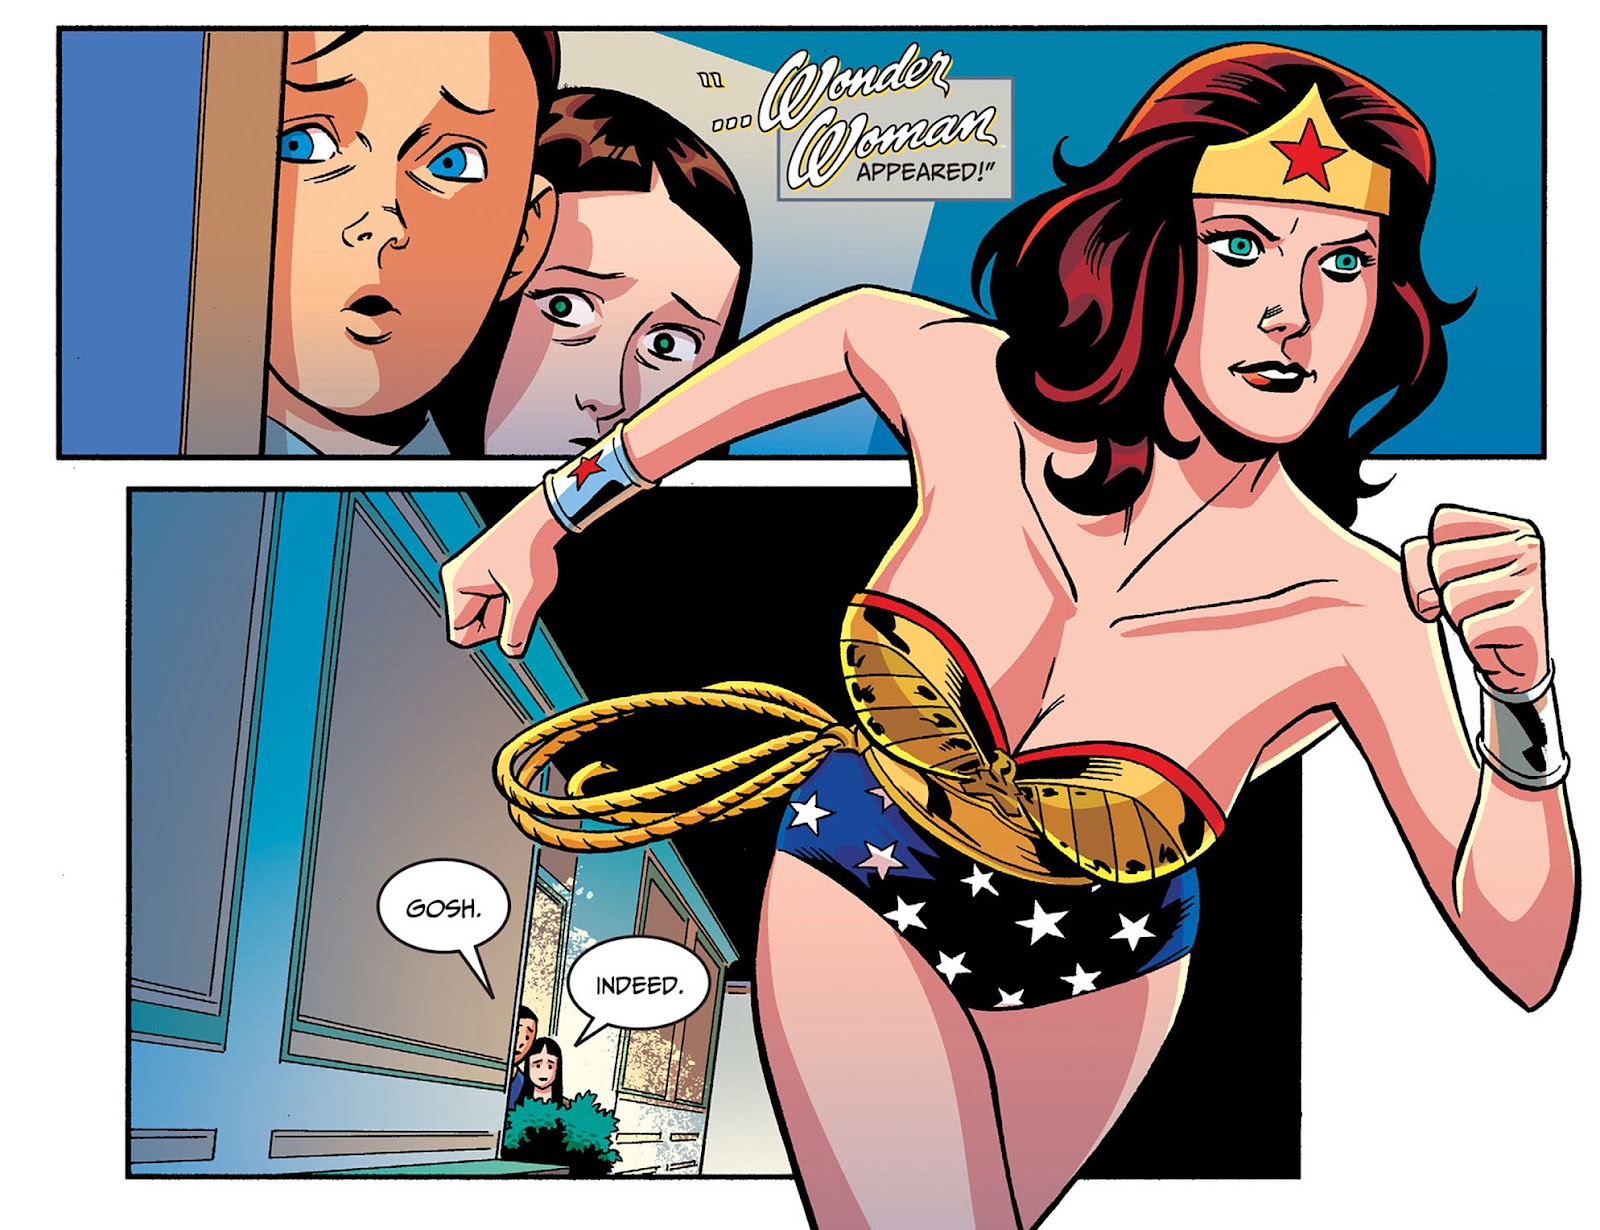 Batman '66 Meets Wonder Woman '77 issue 2 - Page 5